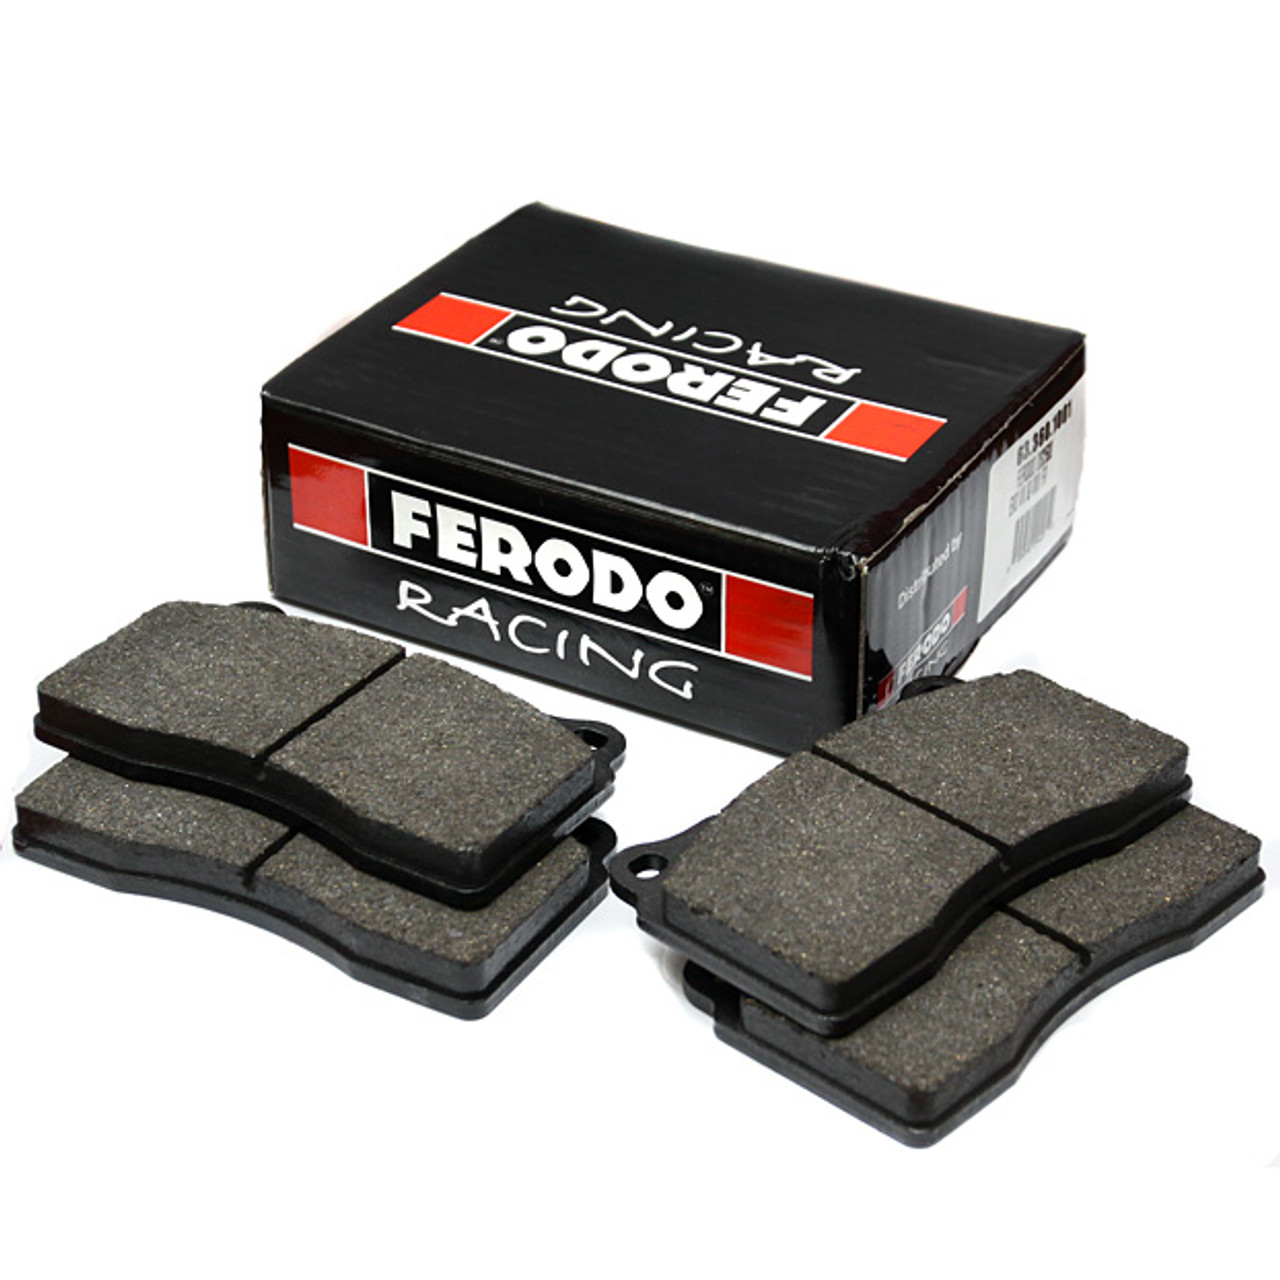 Ferodo Racing DS2500 Front Brake Pads - PQ34 288mm / 312mm